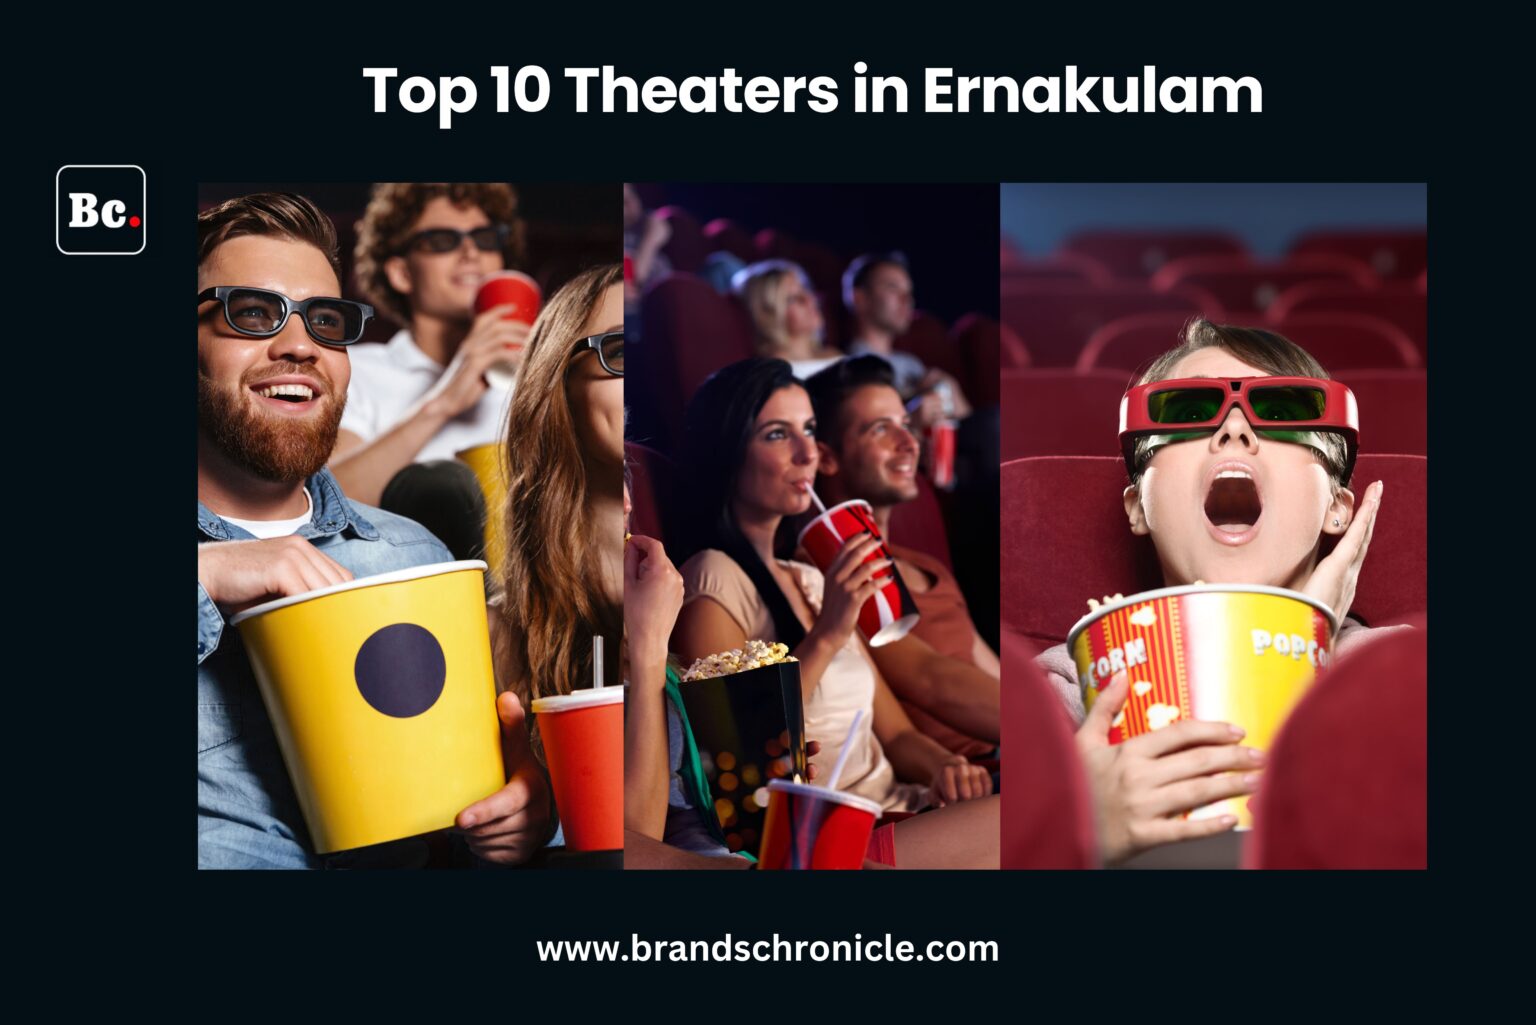 Top 10 Theaters in Ernakulam